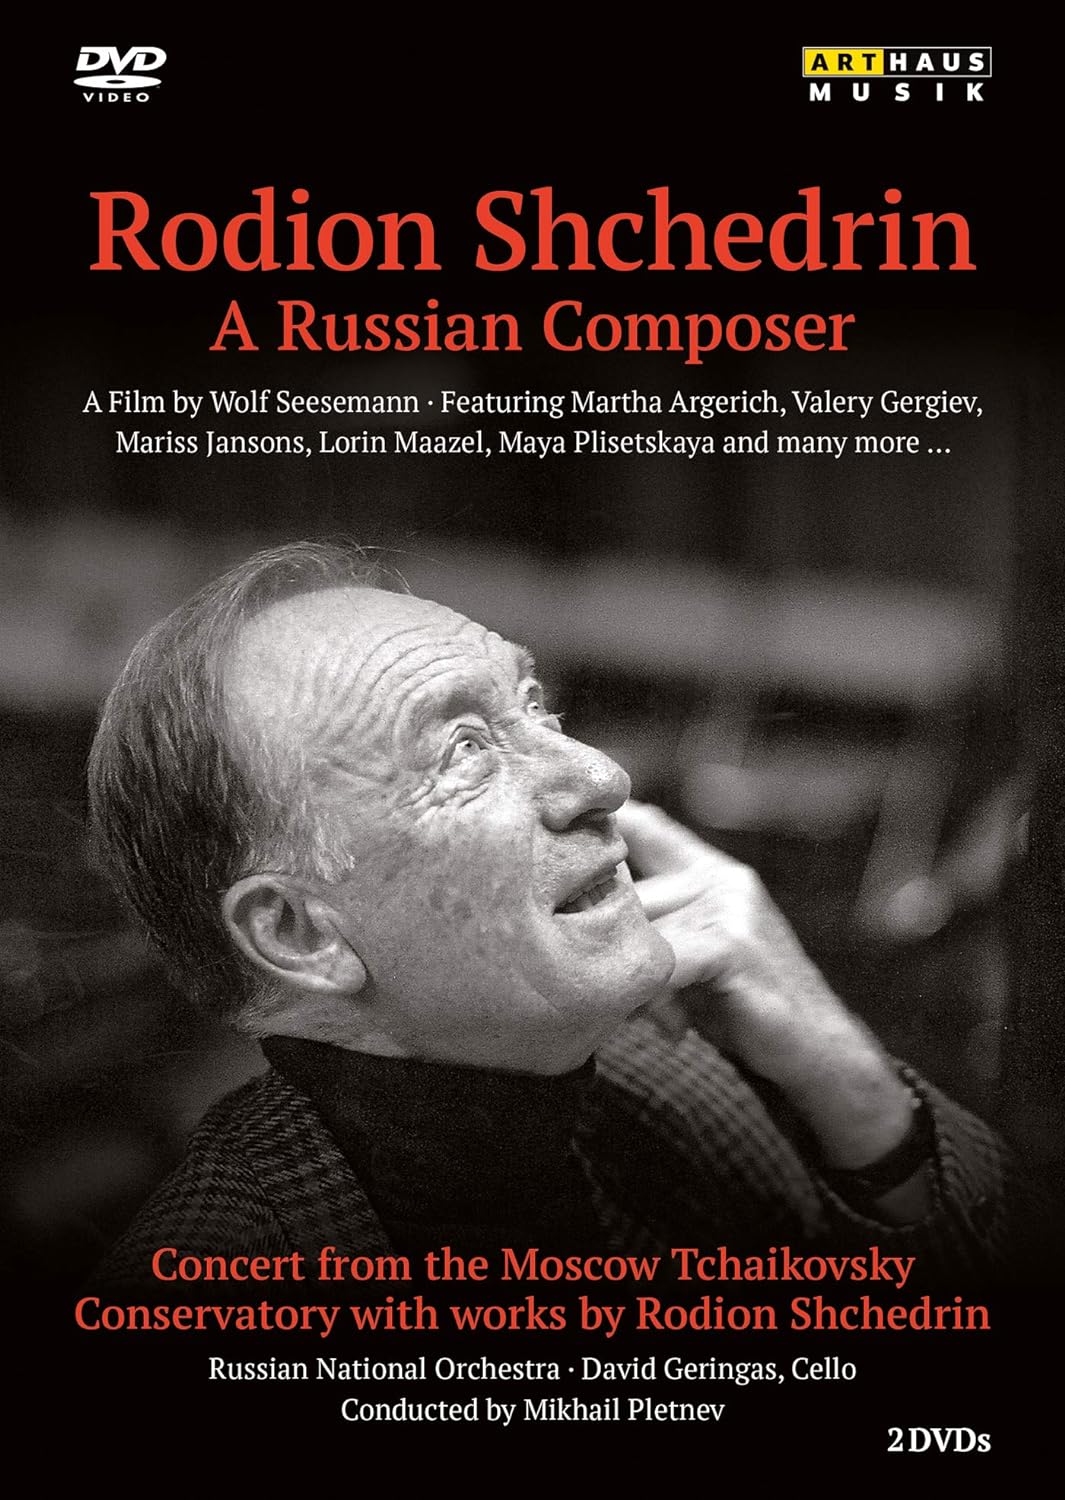 Schedrin: A Russian Composer